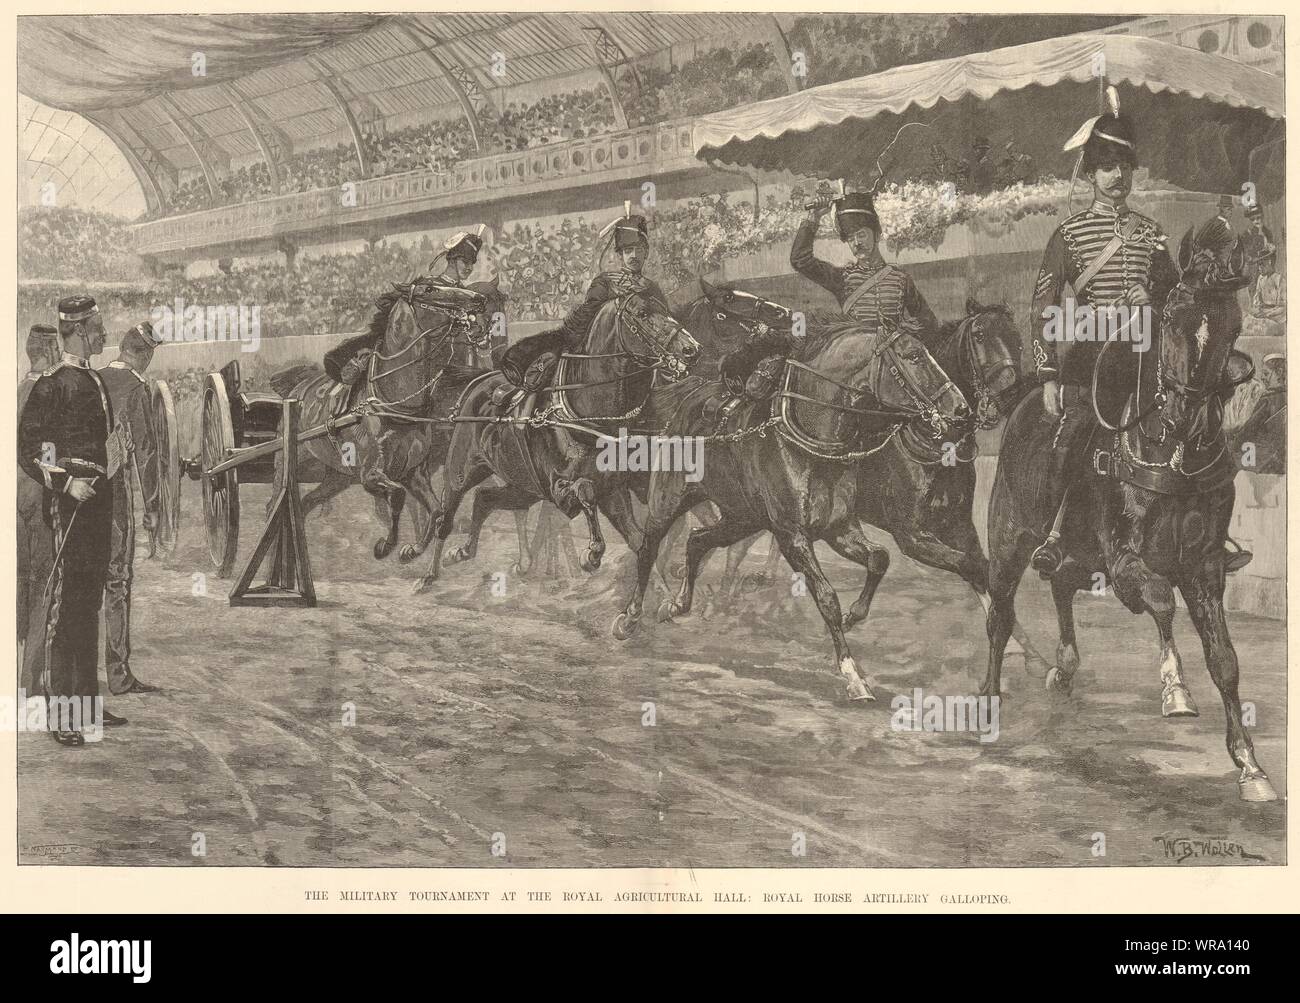 Royal Agricultural Hall militärischen Turnier Royal Horse artillery galoppierenden 1893 Stockfoto